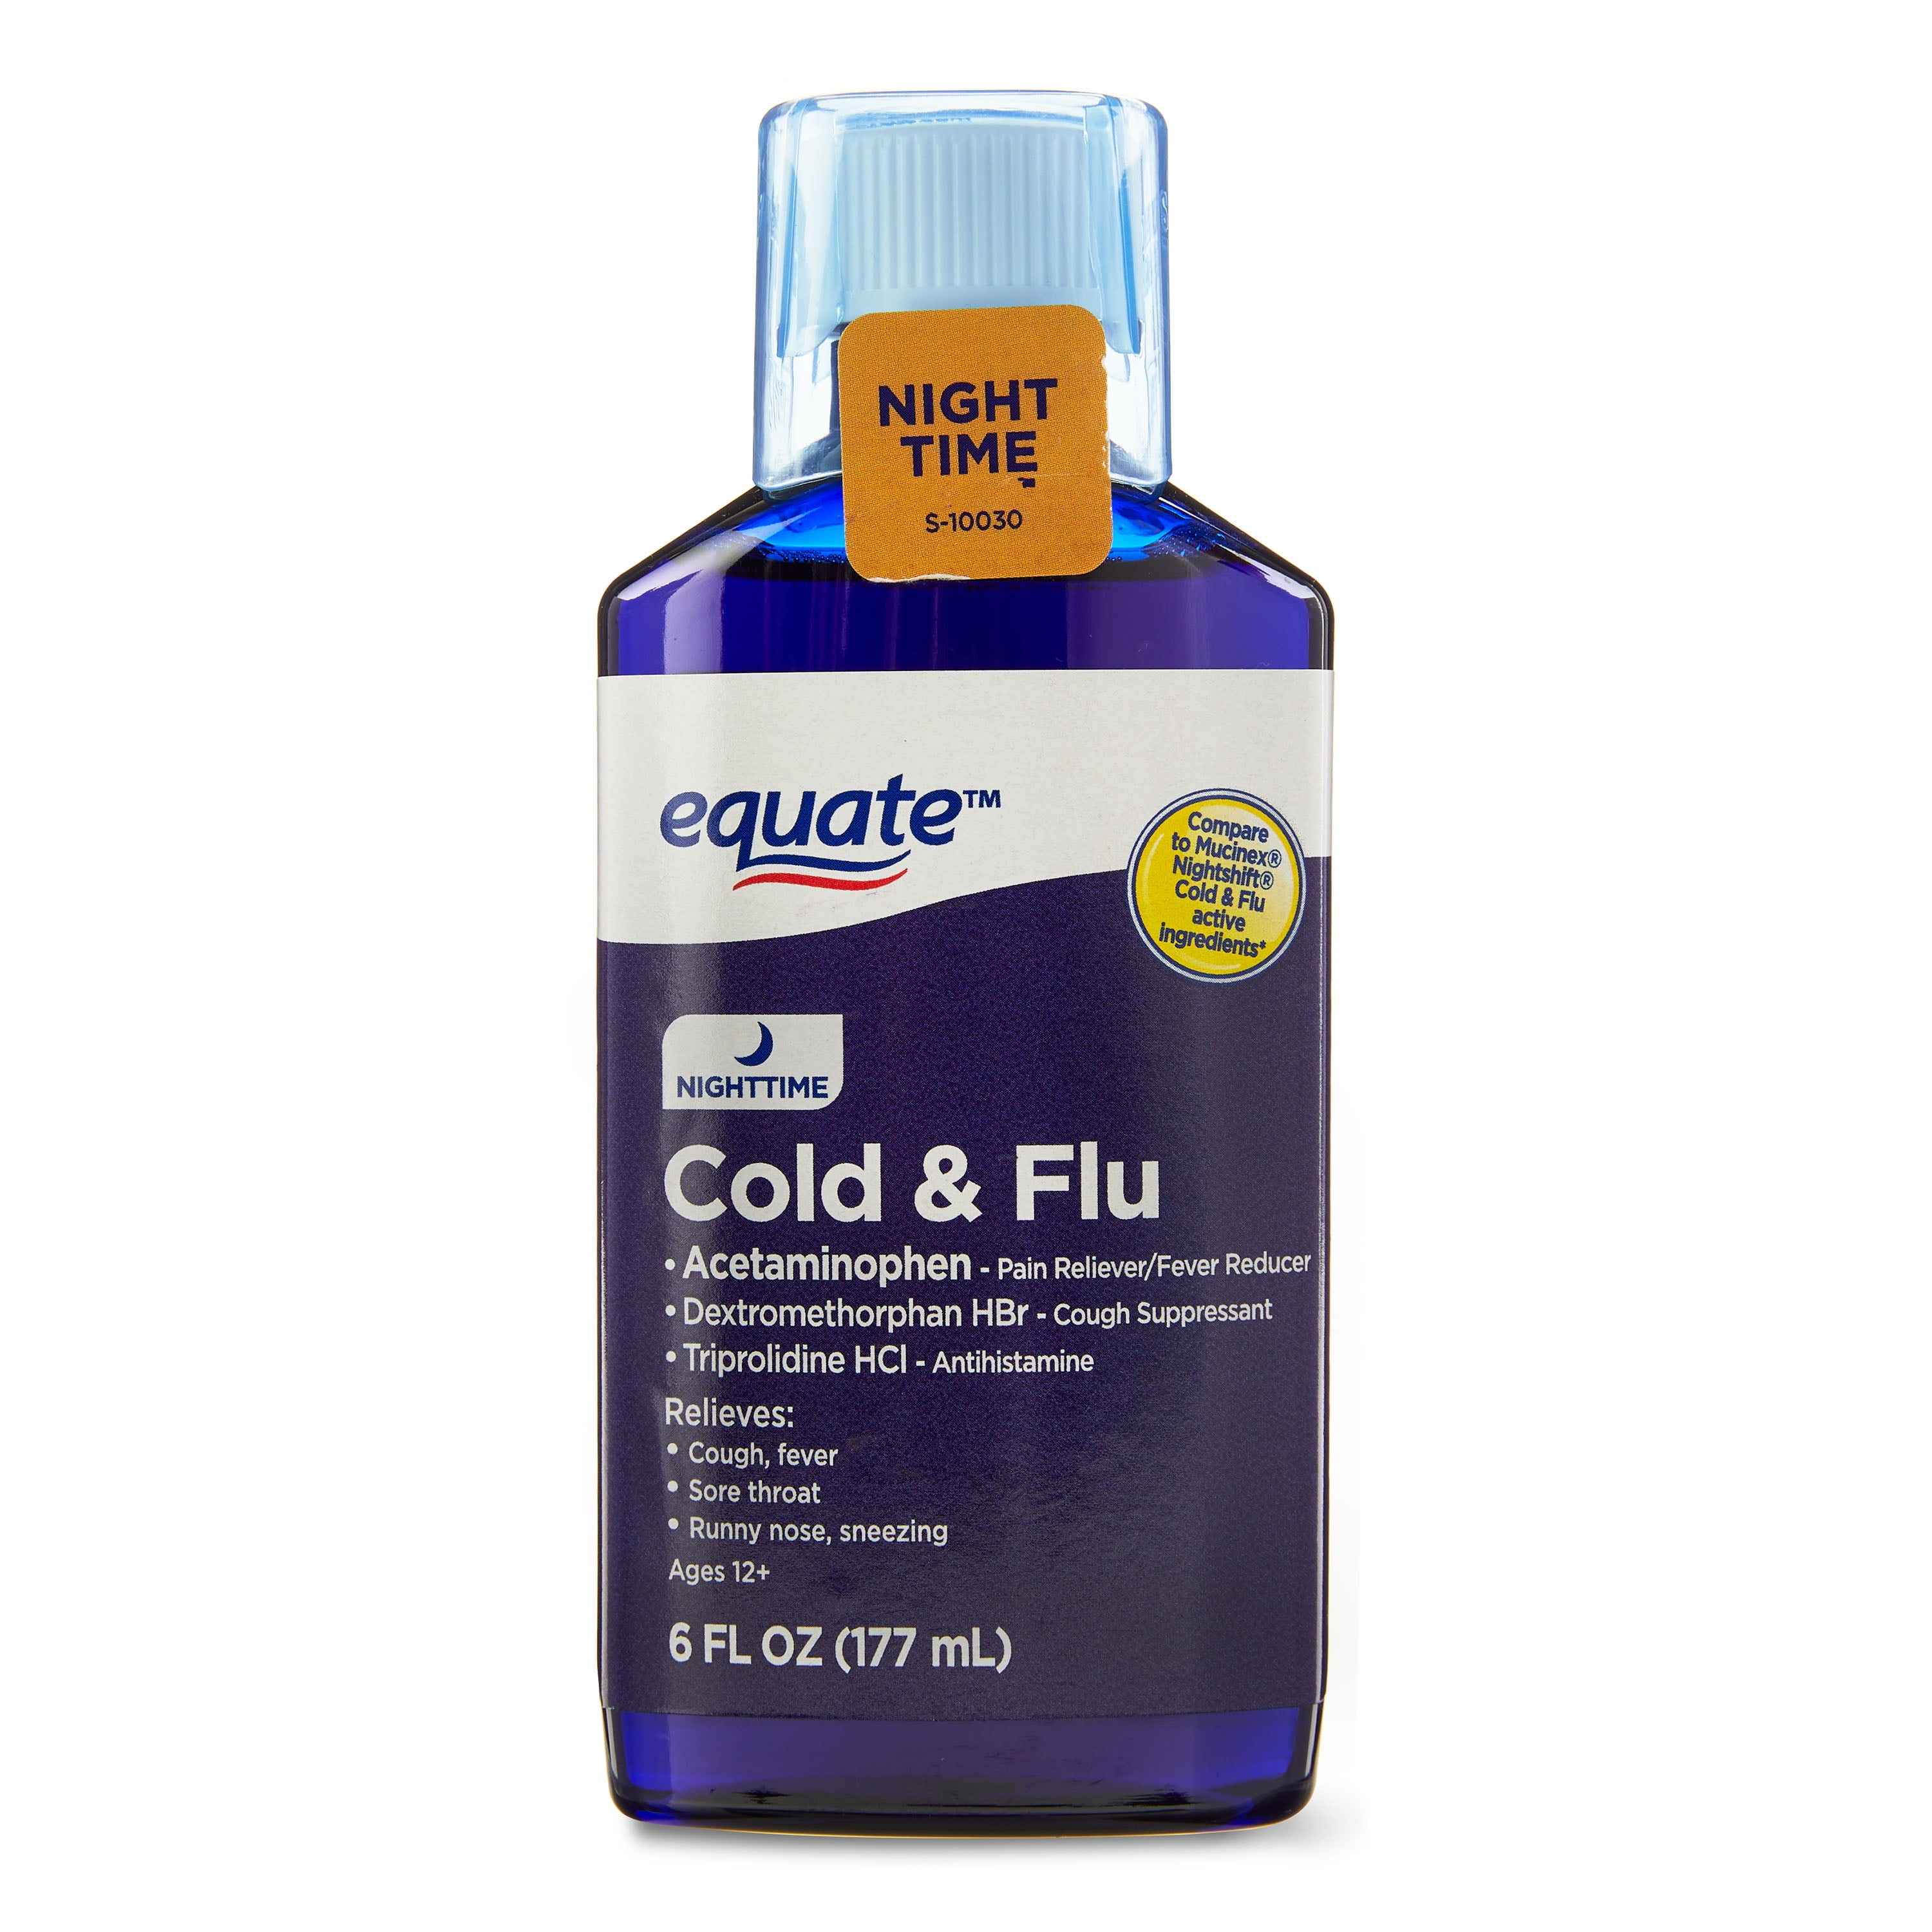 Equate Nighttime Cold & Flu Liquid Medicine, 6 fl oz